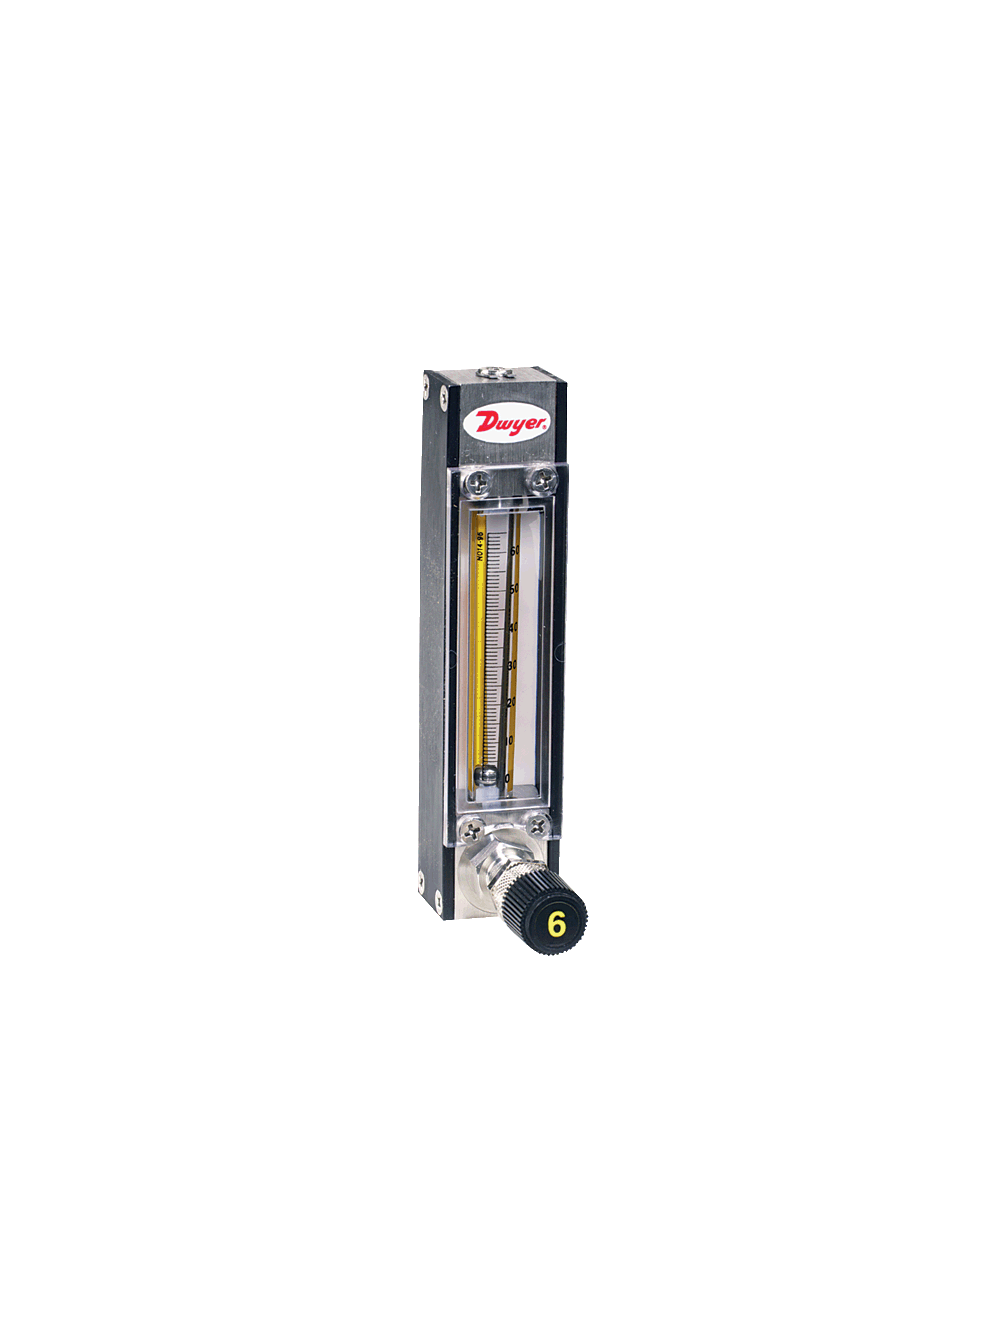 Dwyer Ultra-View PSF Flowmeter PSF flowmeter 1.0-10.0 GPM Water UV-2112 4-38 LPM 